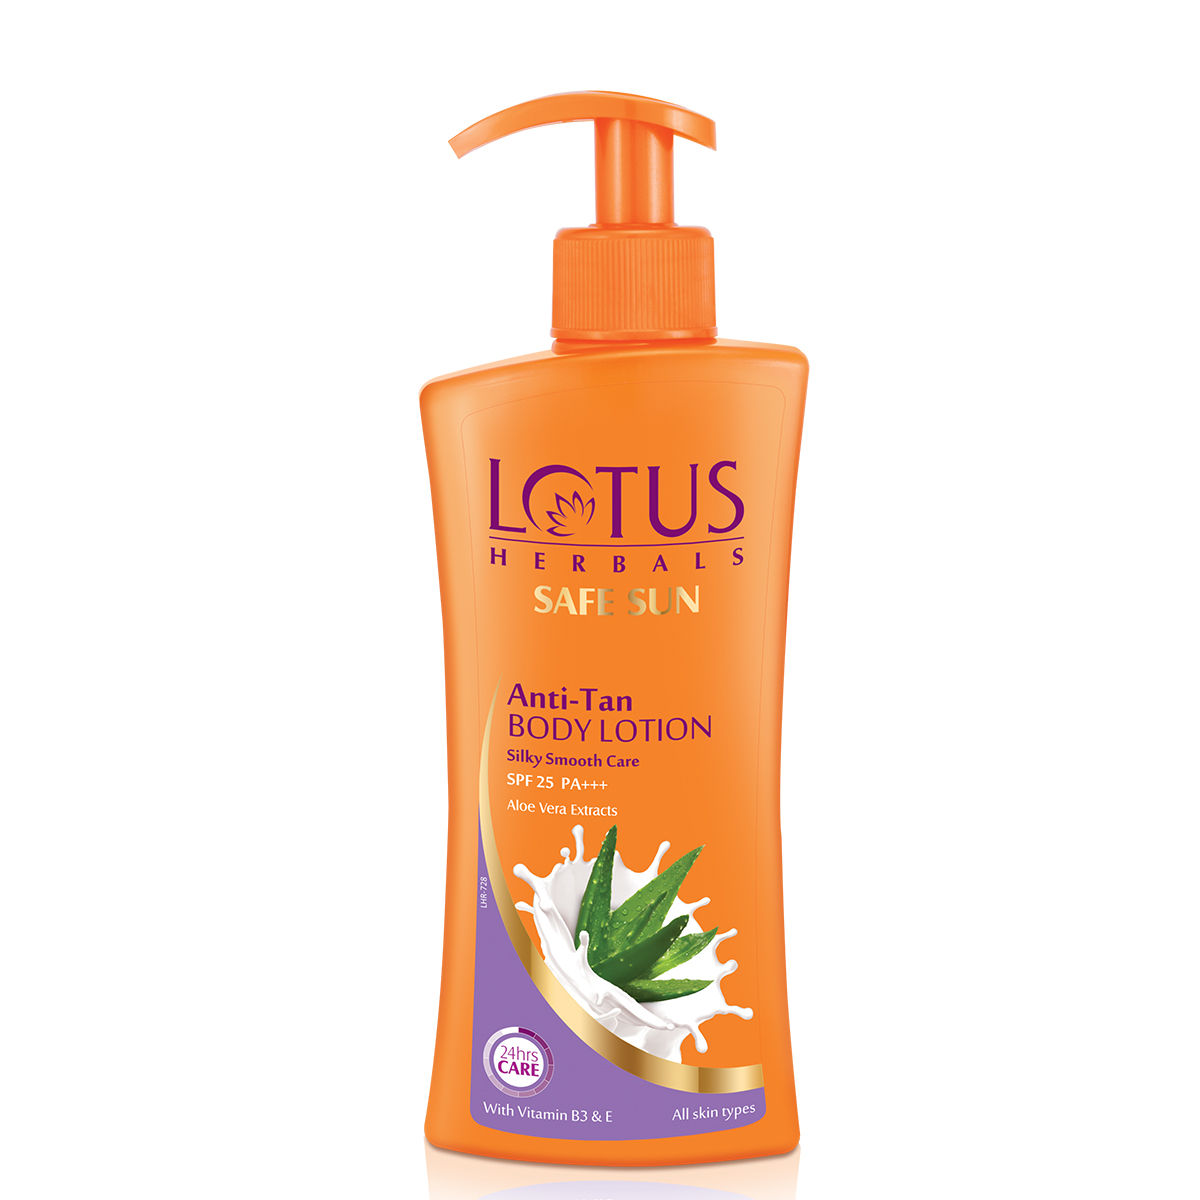 Lotus Herbals Safe Sun Anti-Tan Body Lotion SPF25 PA+++